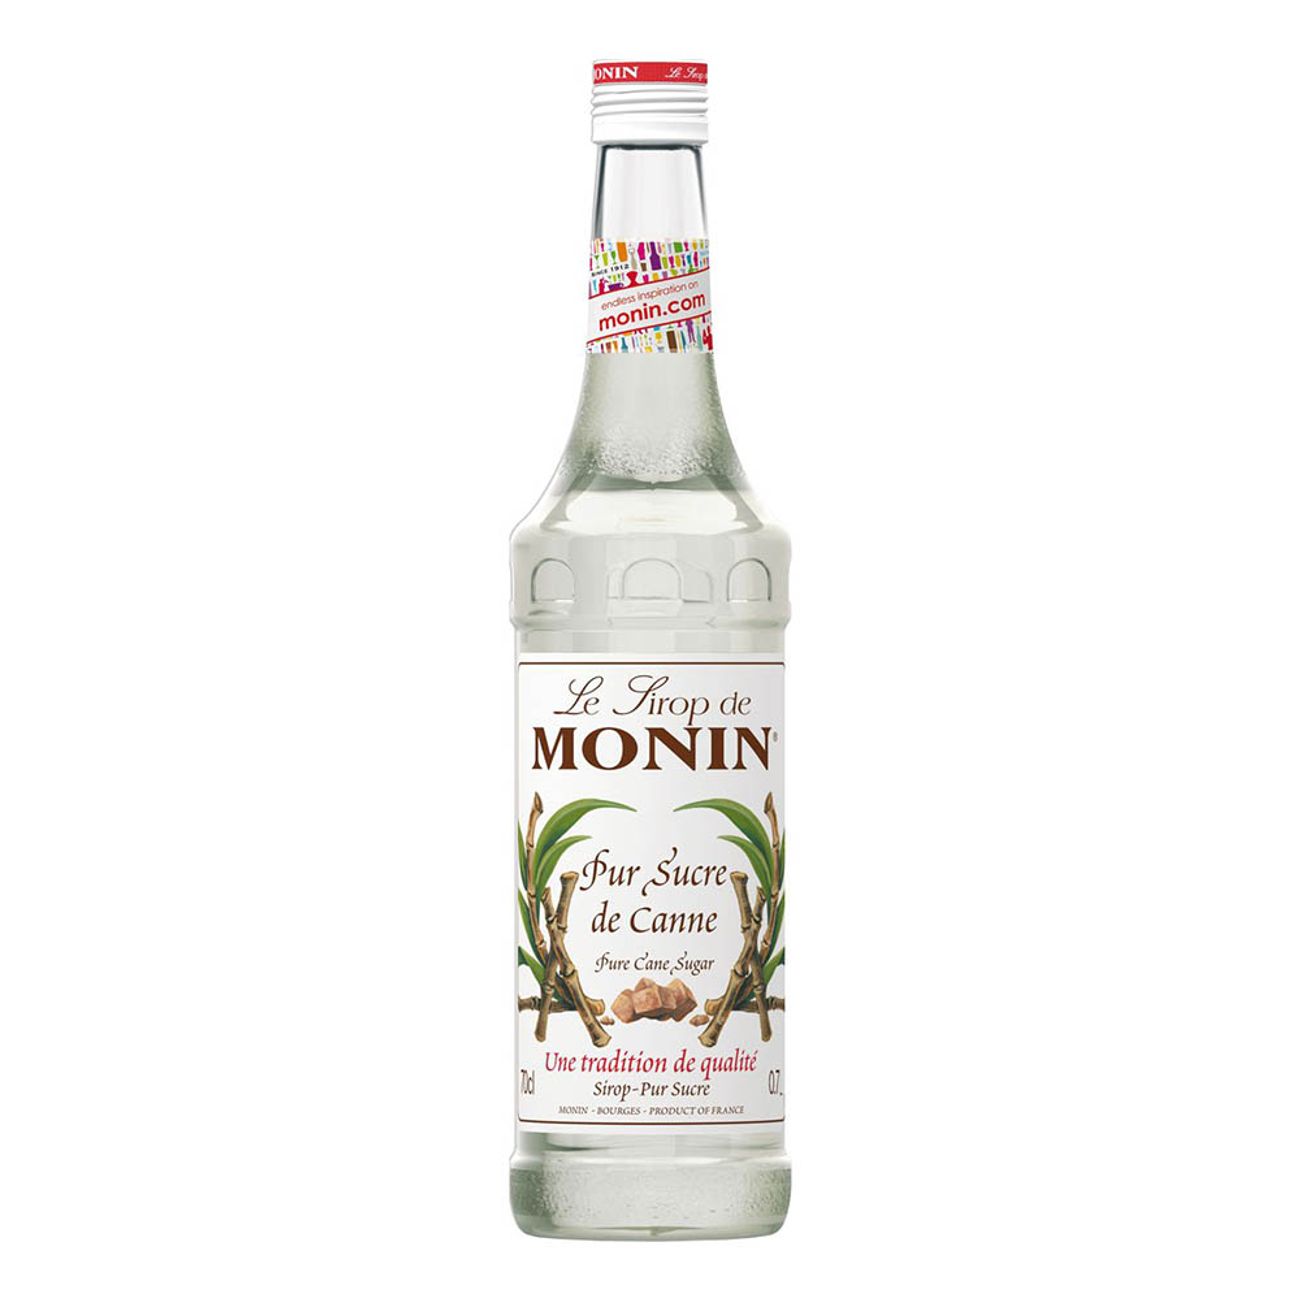 monin-cane-sugar-syrup-1